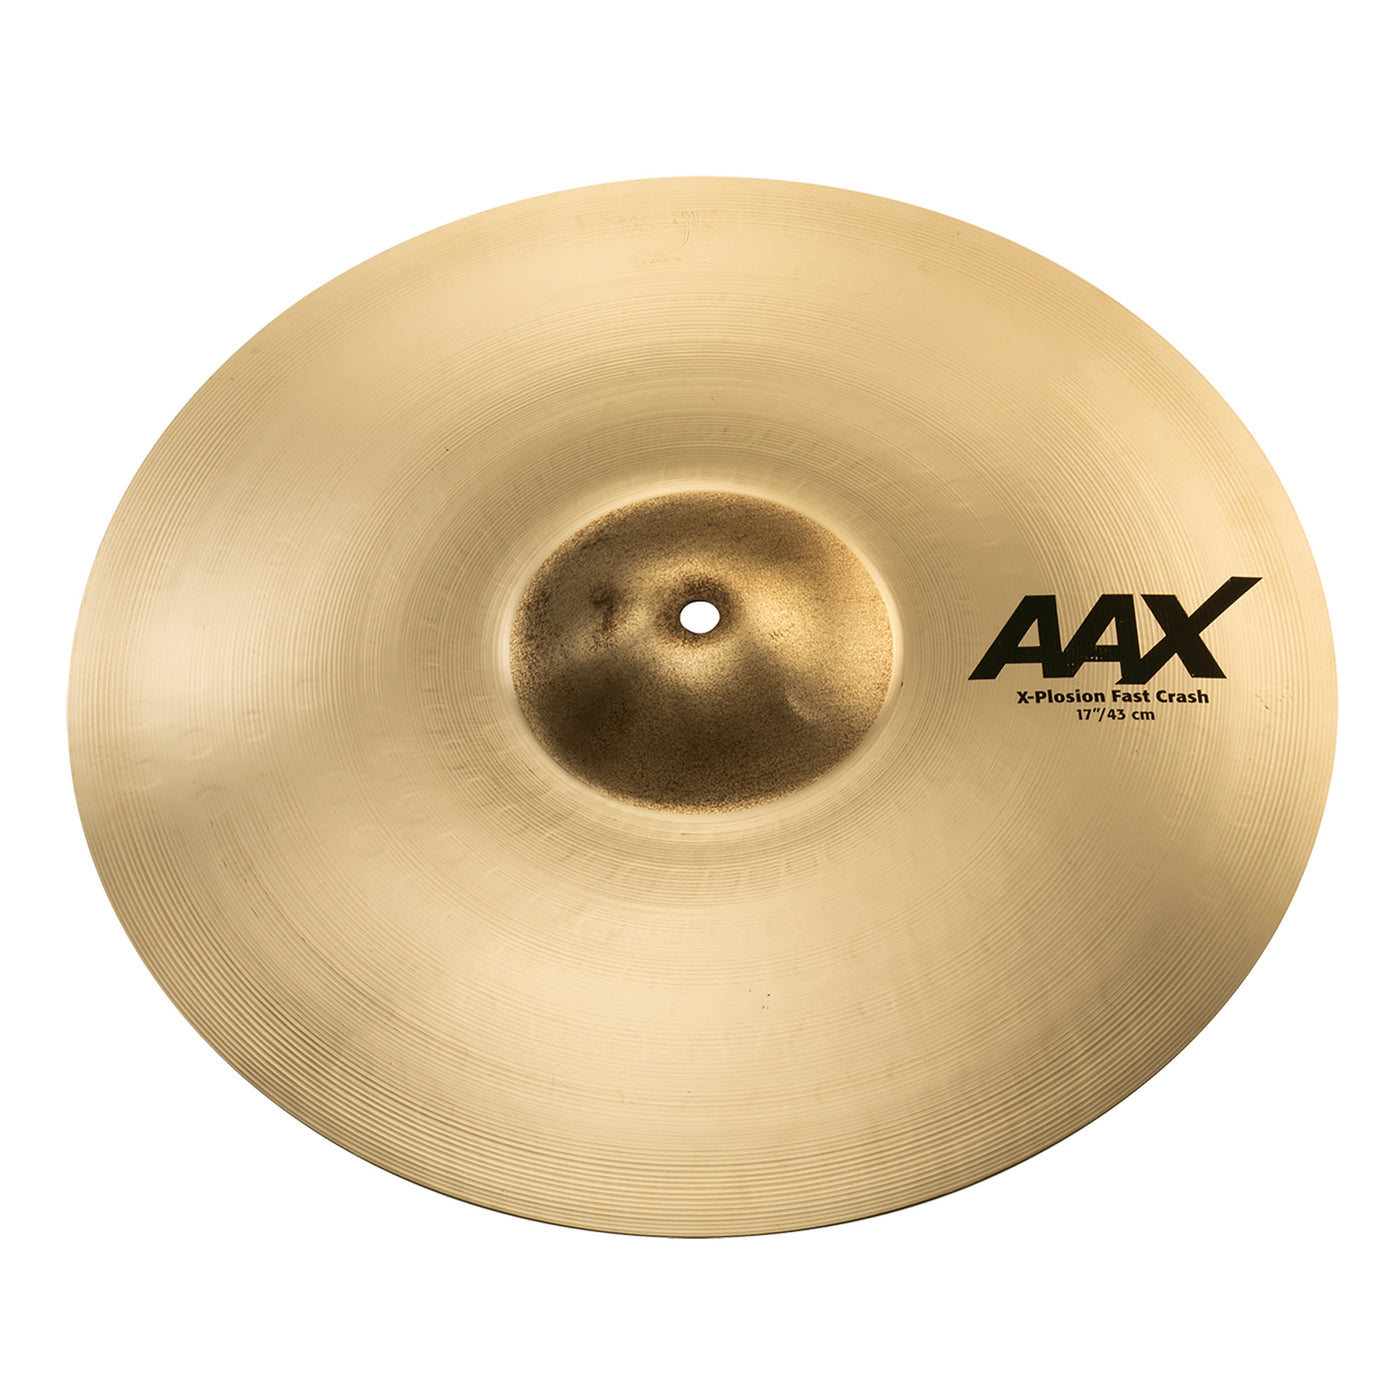 Sabian 17" AAX X-Plosion Fast Crash Cymbal - Brilliant Finish